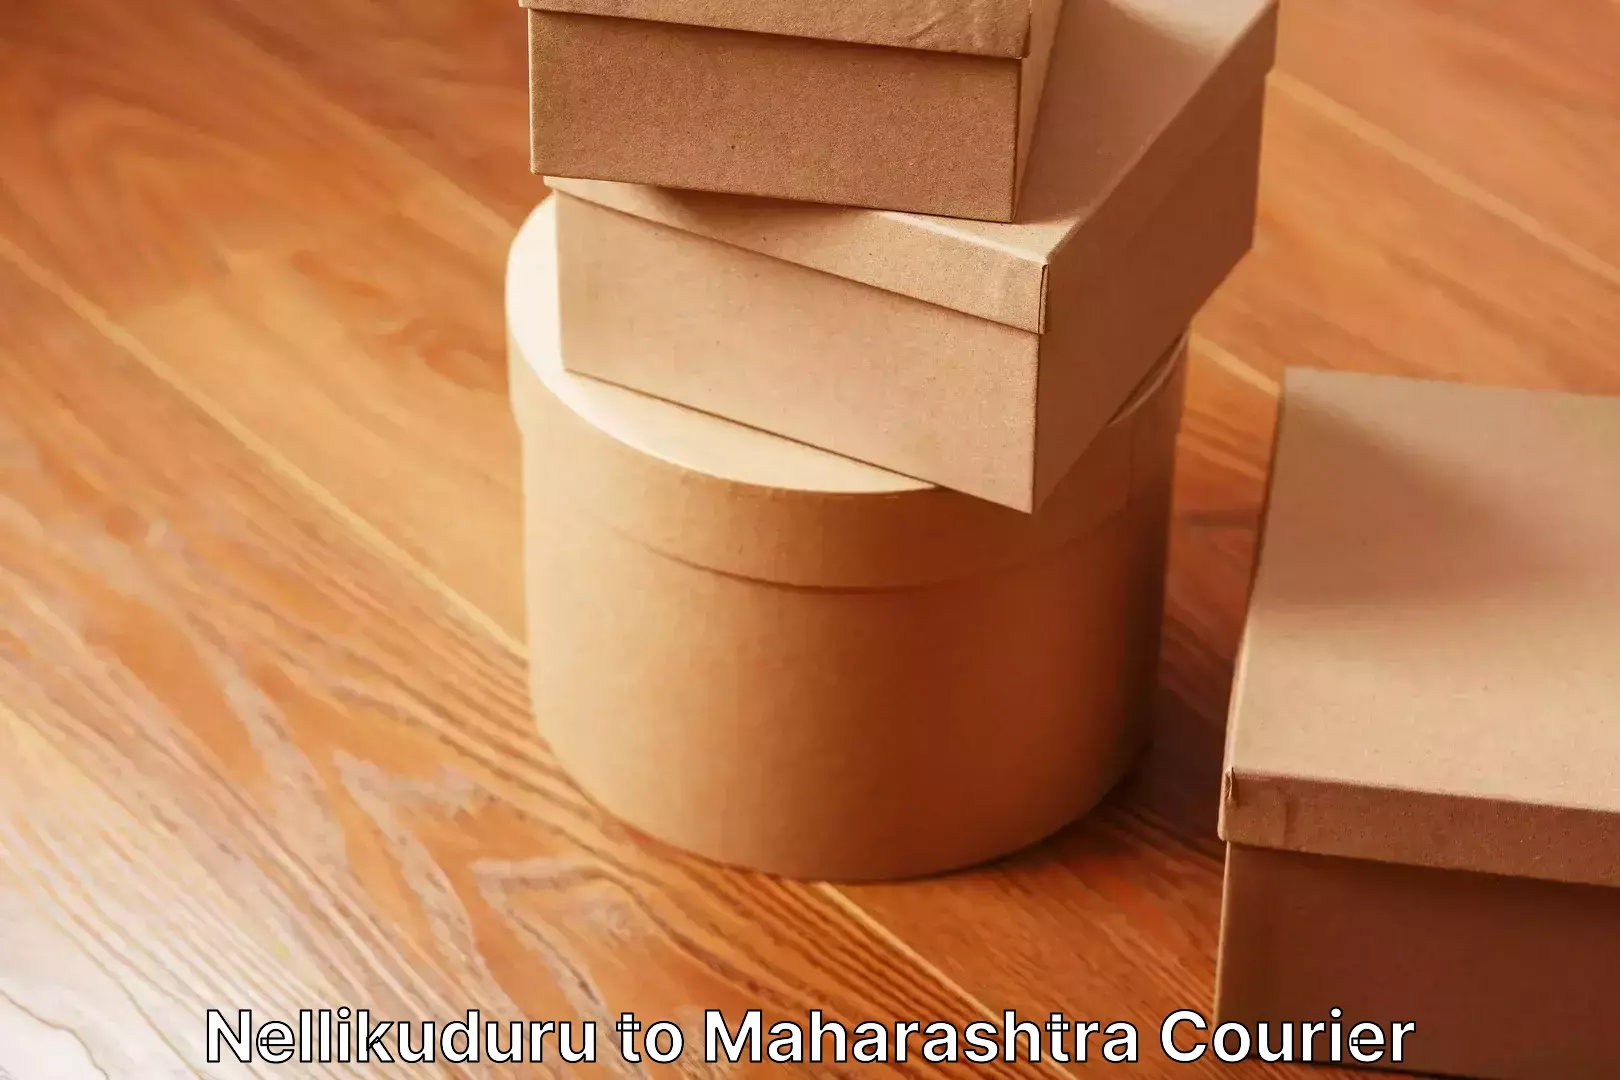 Furniture transport company Nellikuduru to Maharashtra